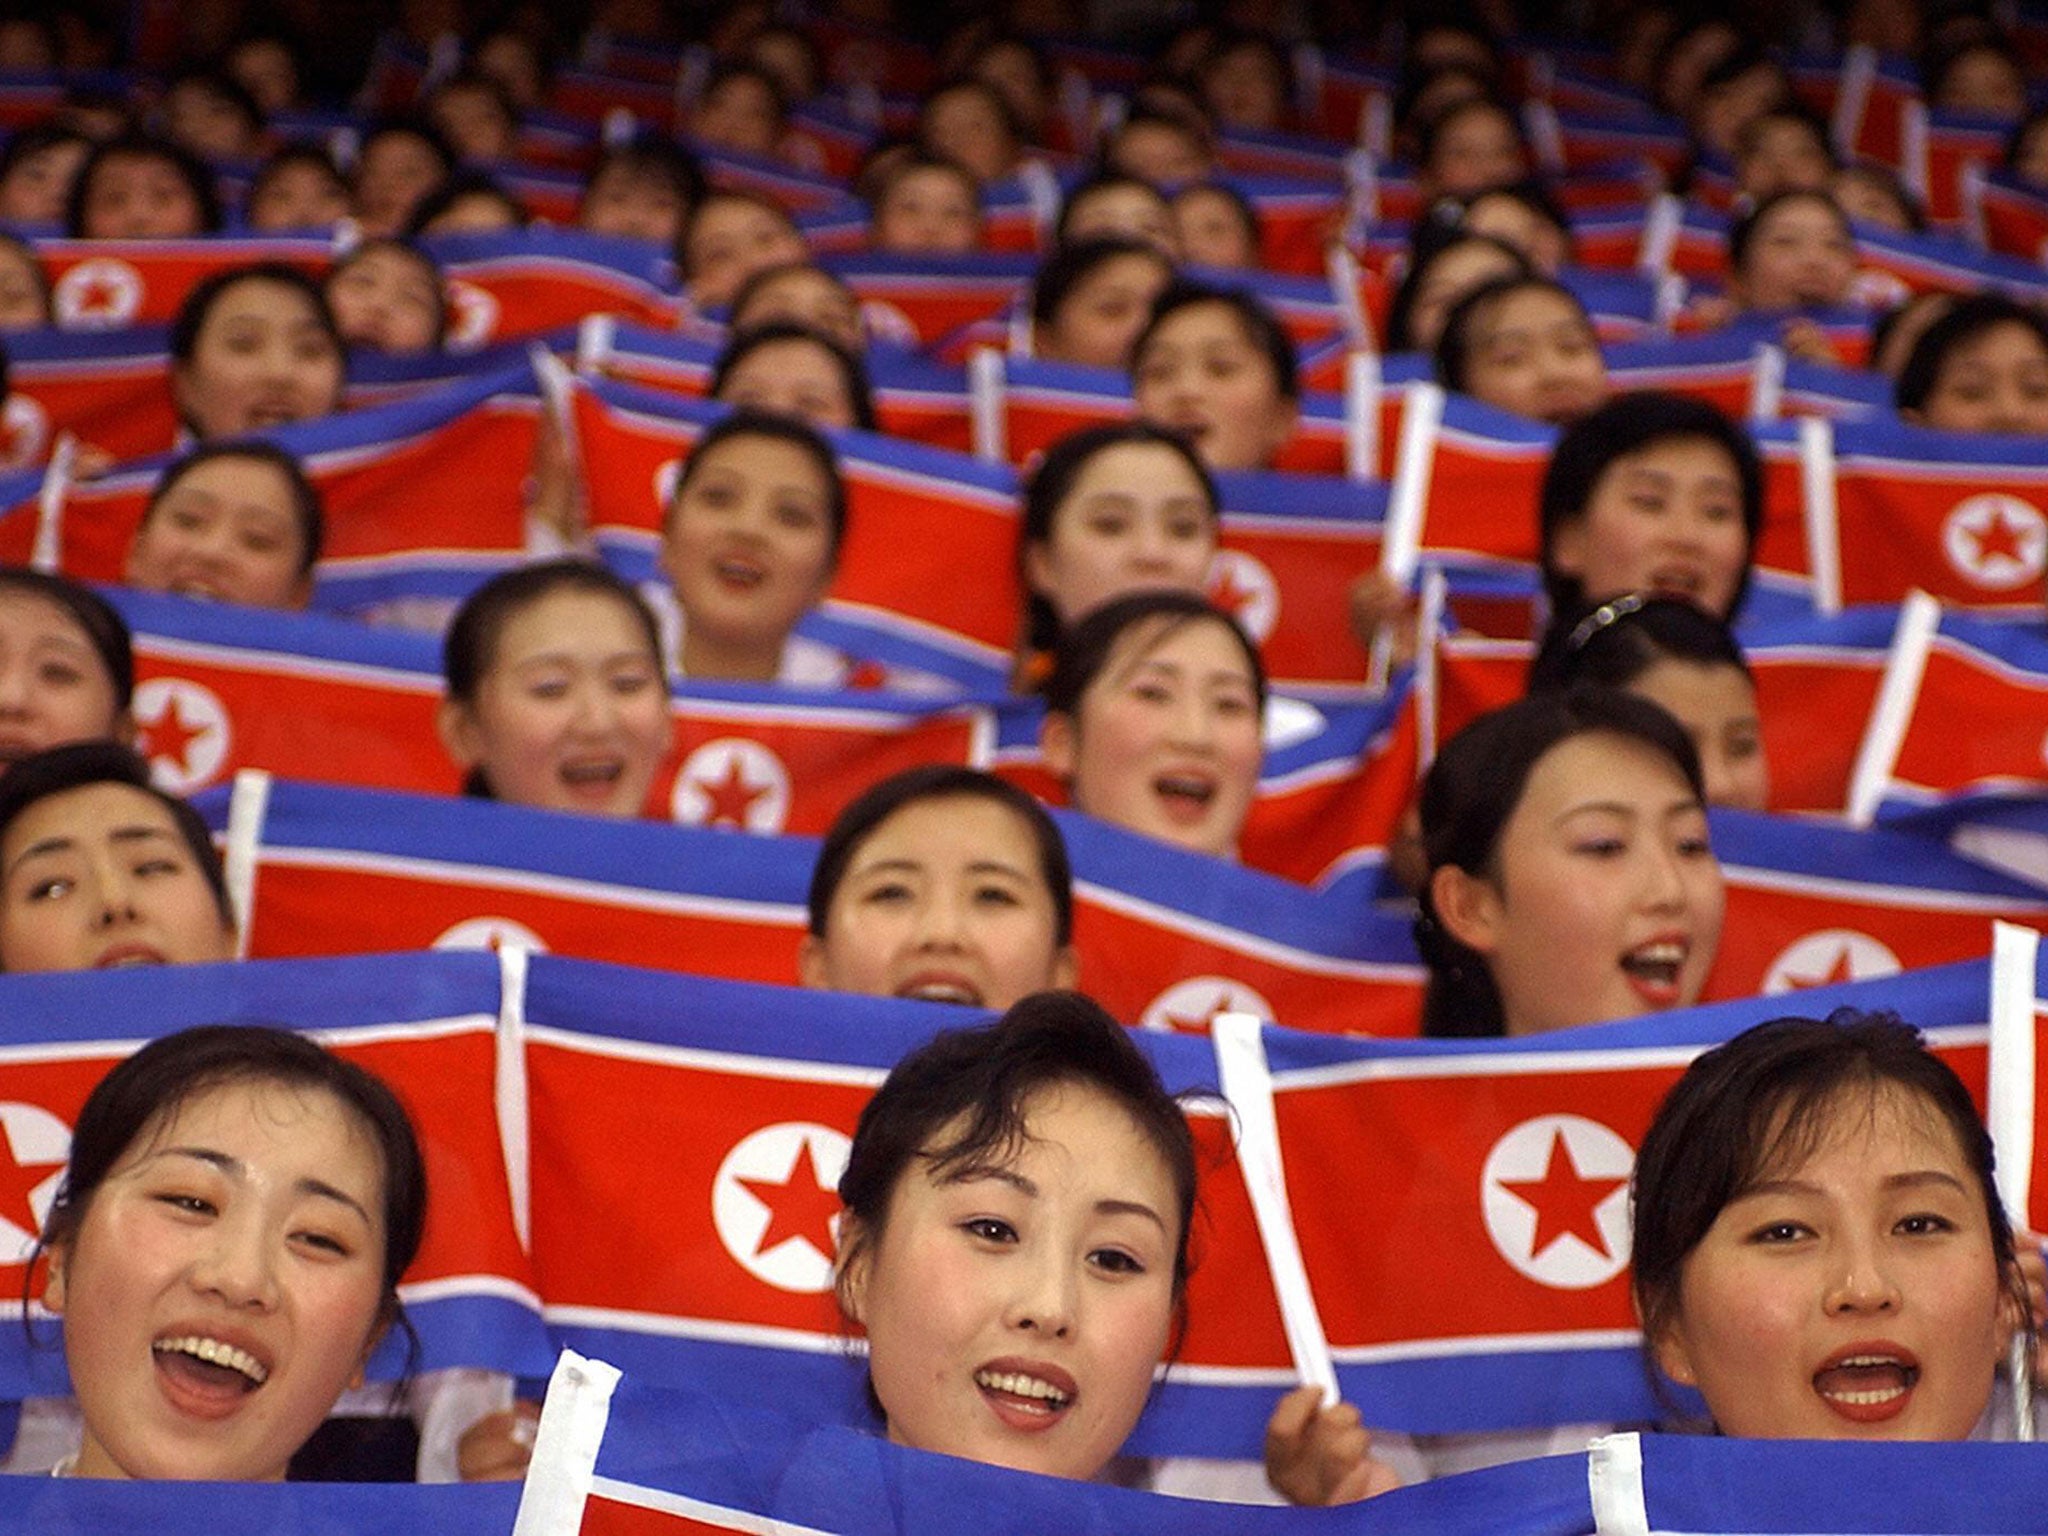 North Korean cheerleaders members wave their national flags during the 2003 World Students Games opening ceremony in Daegu